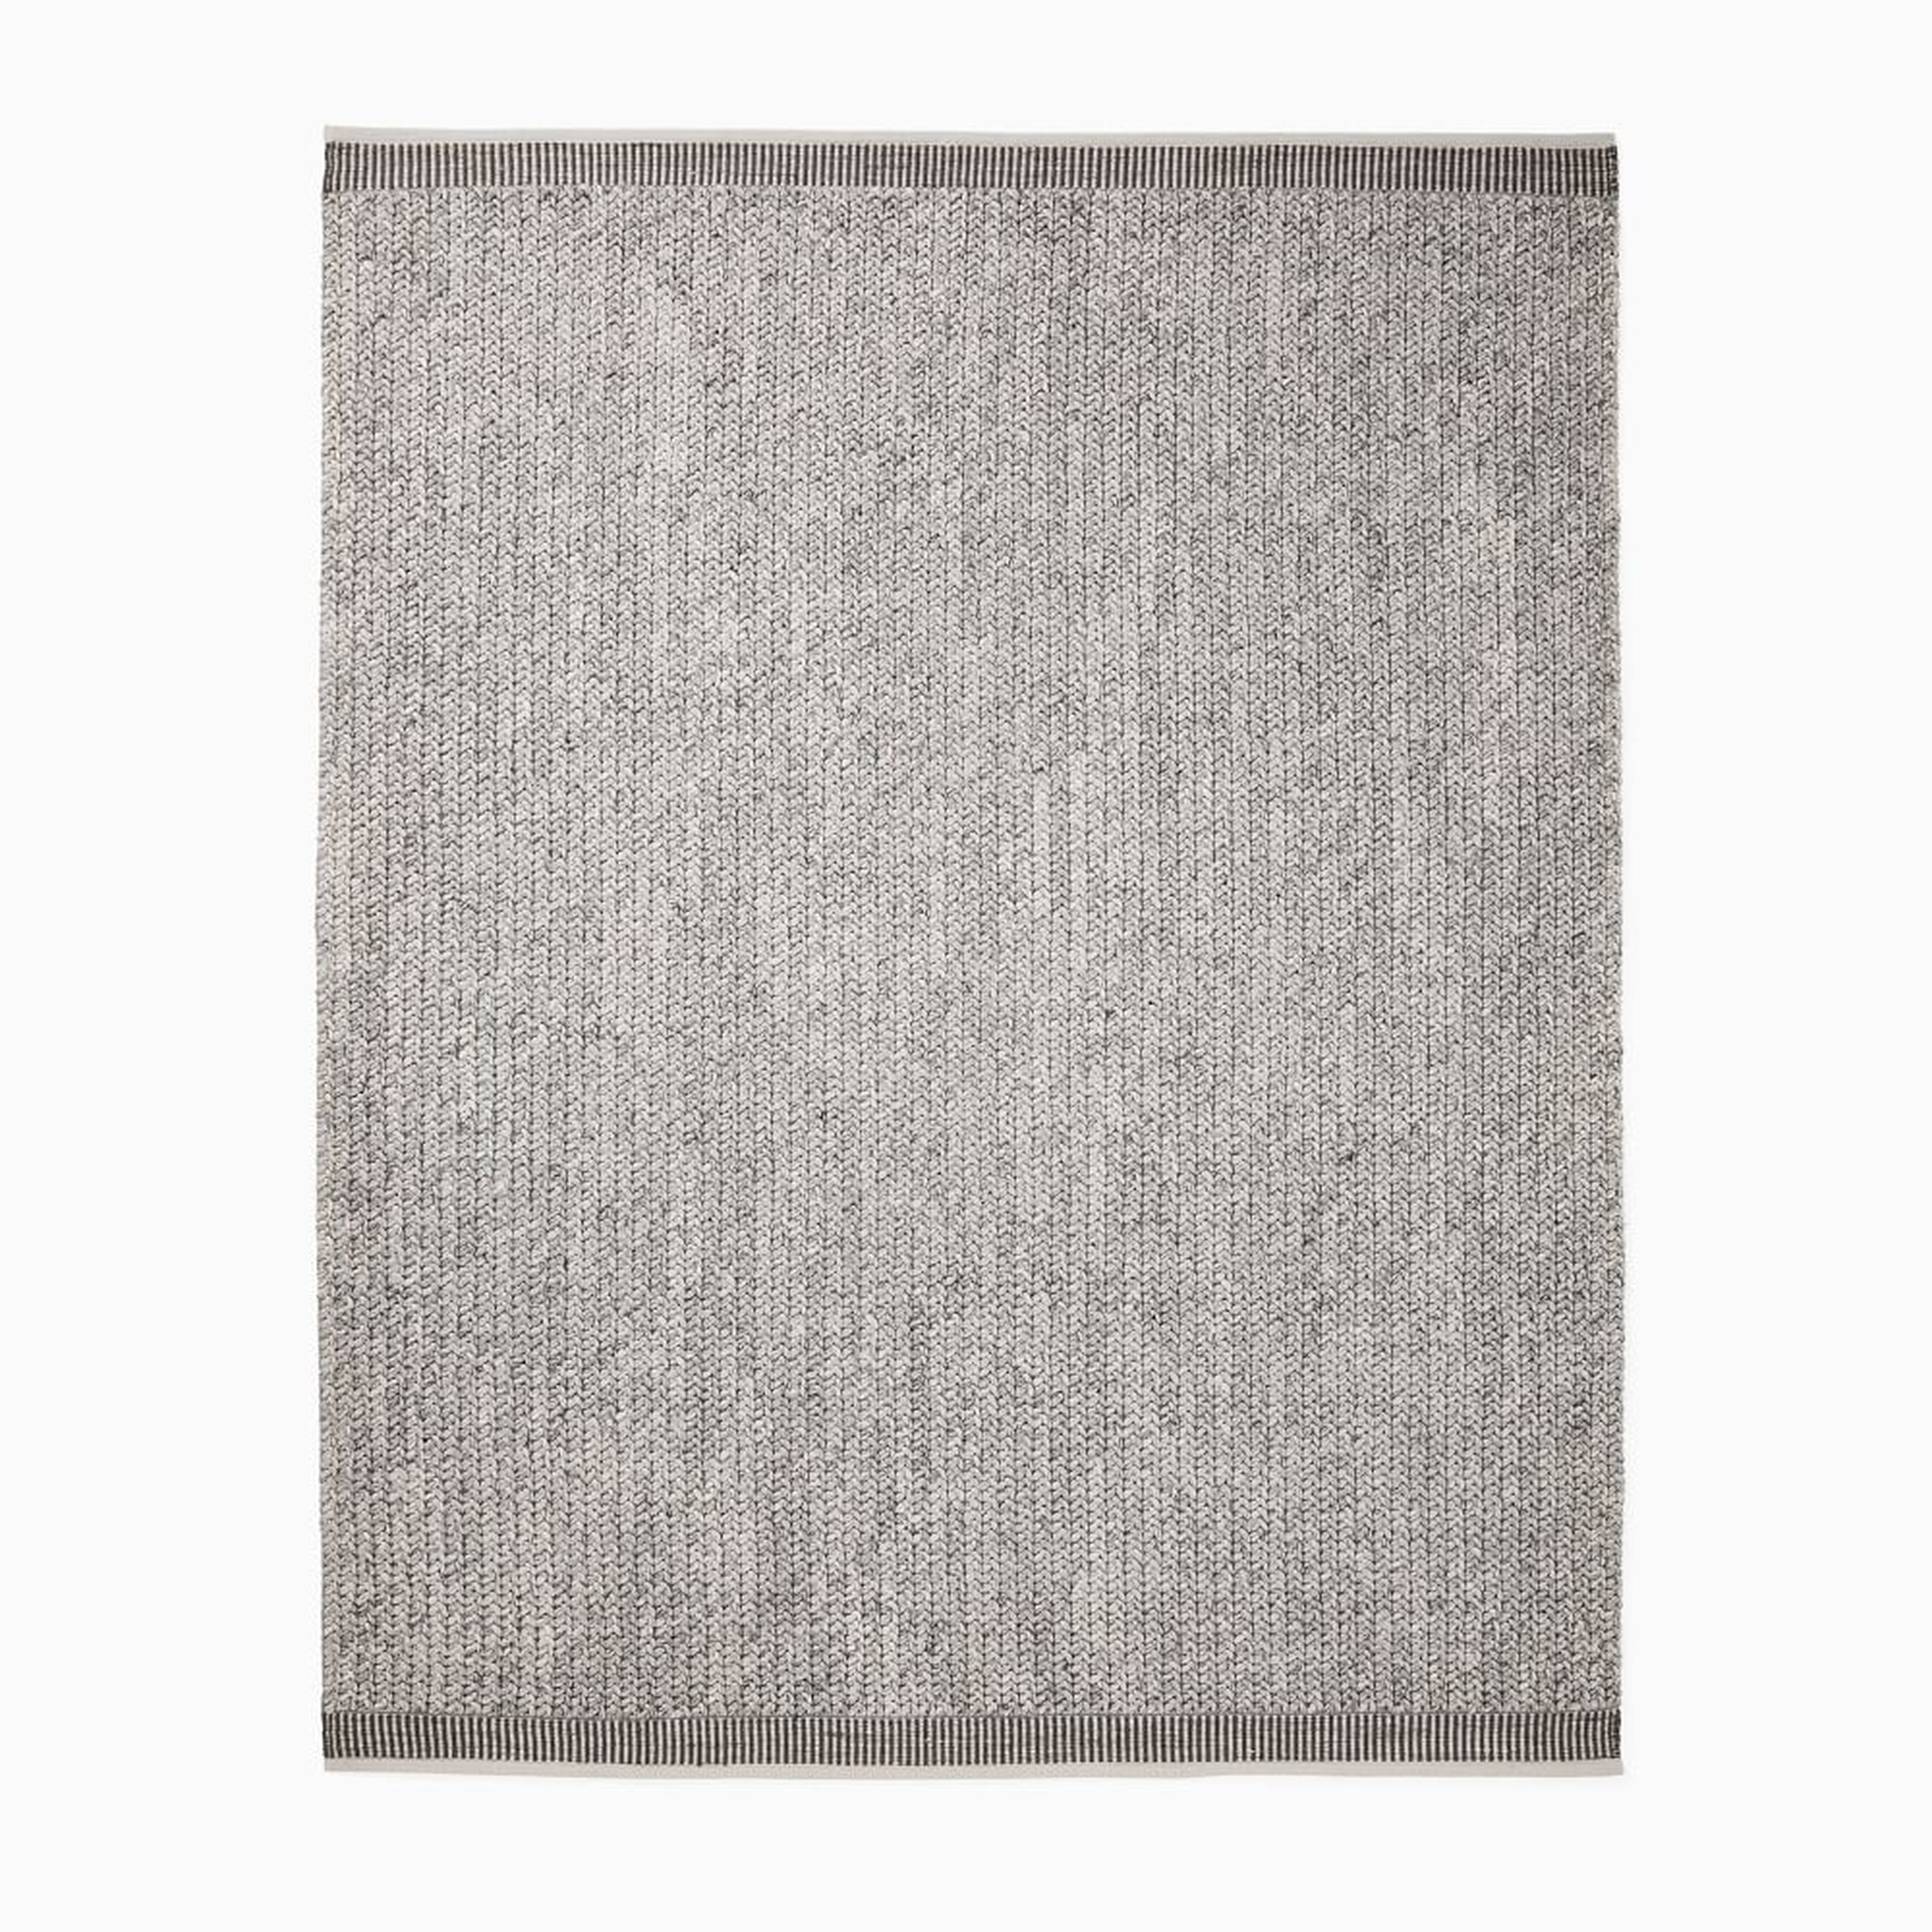 Chunky Twist Wool Rug, 8x10, Light Gray - West Elm